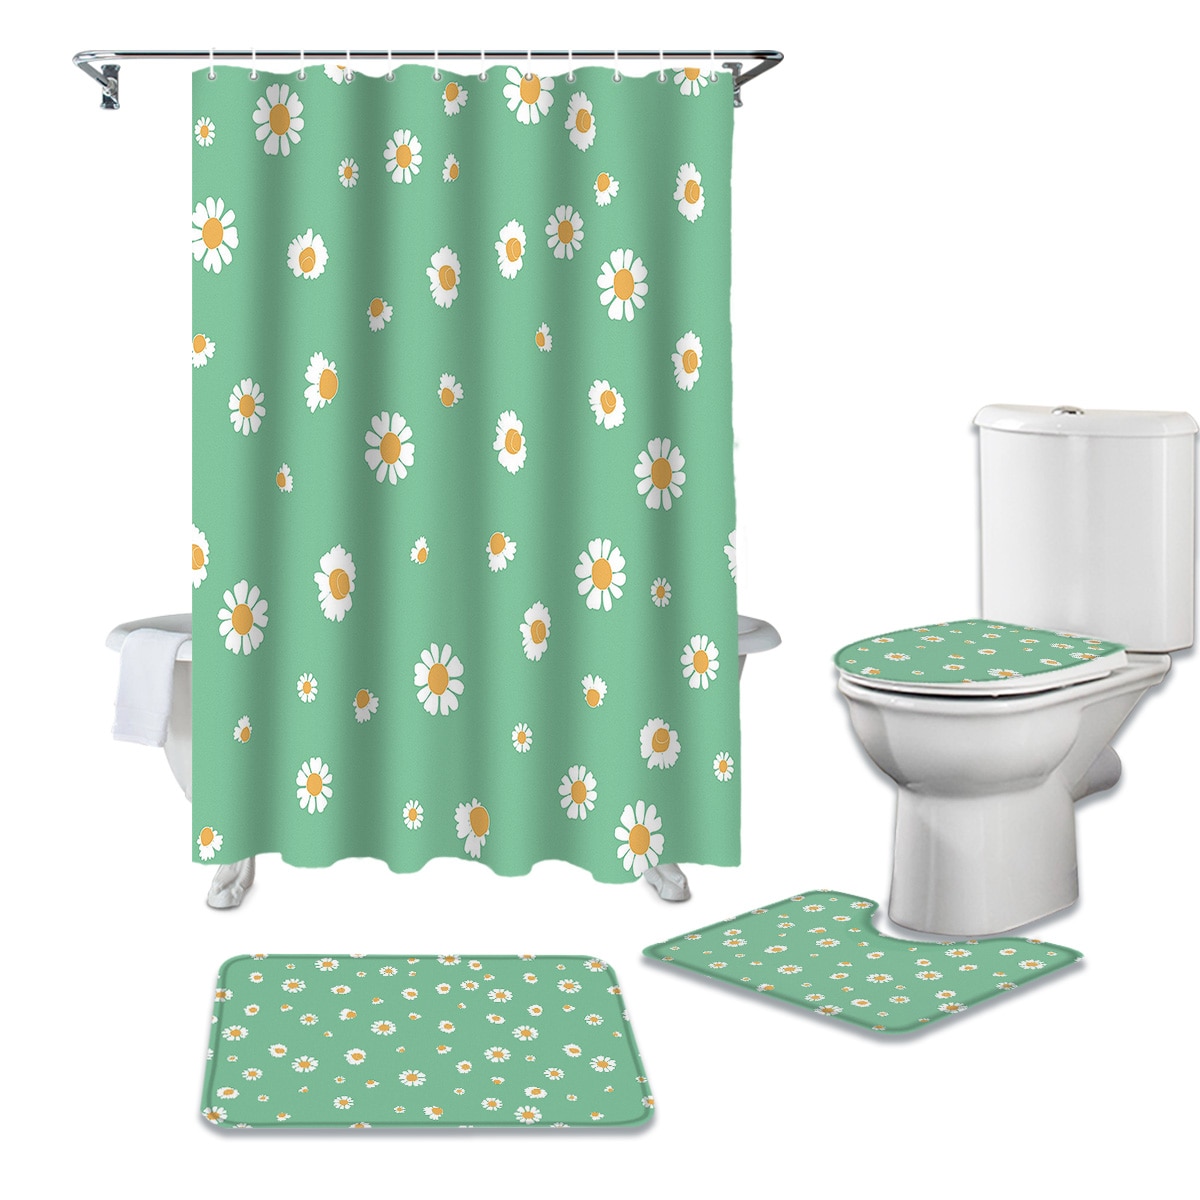 Fresh Daisy Flower Bathroom Set Durable Fabric Waterproof Shower Curtain